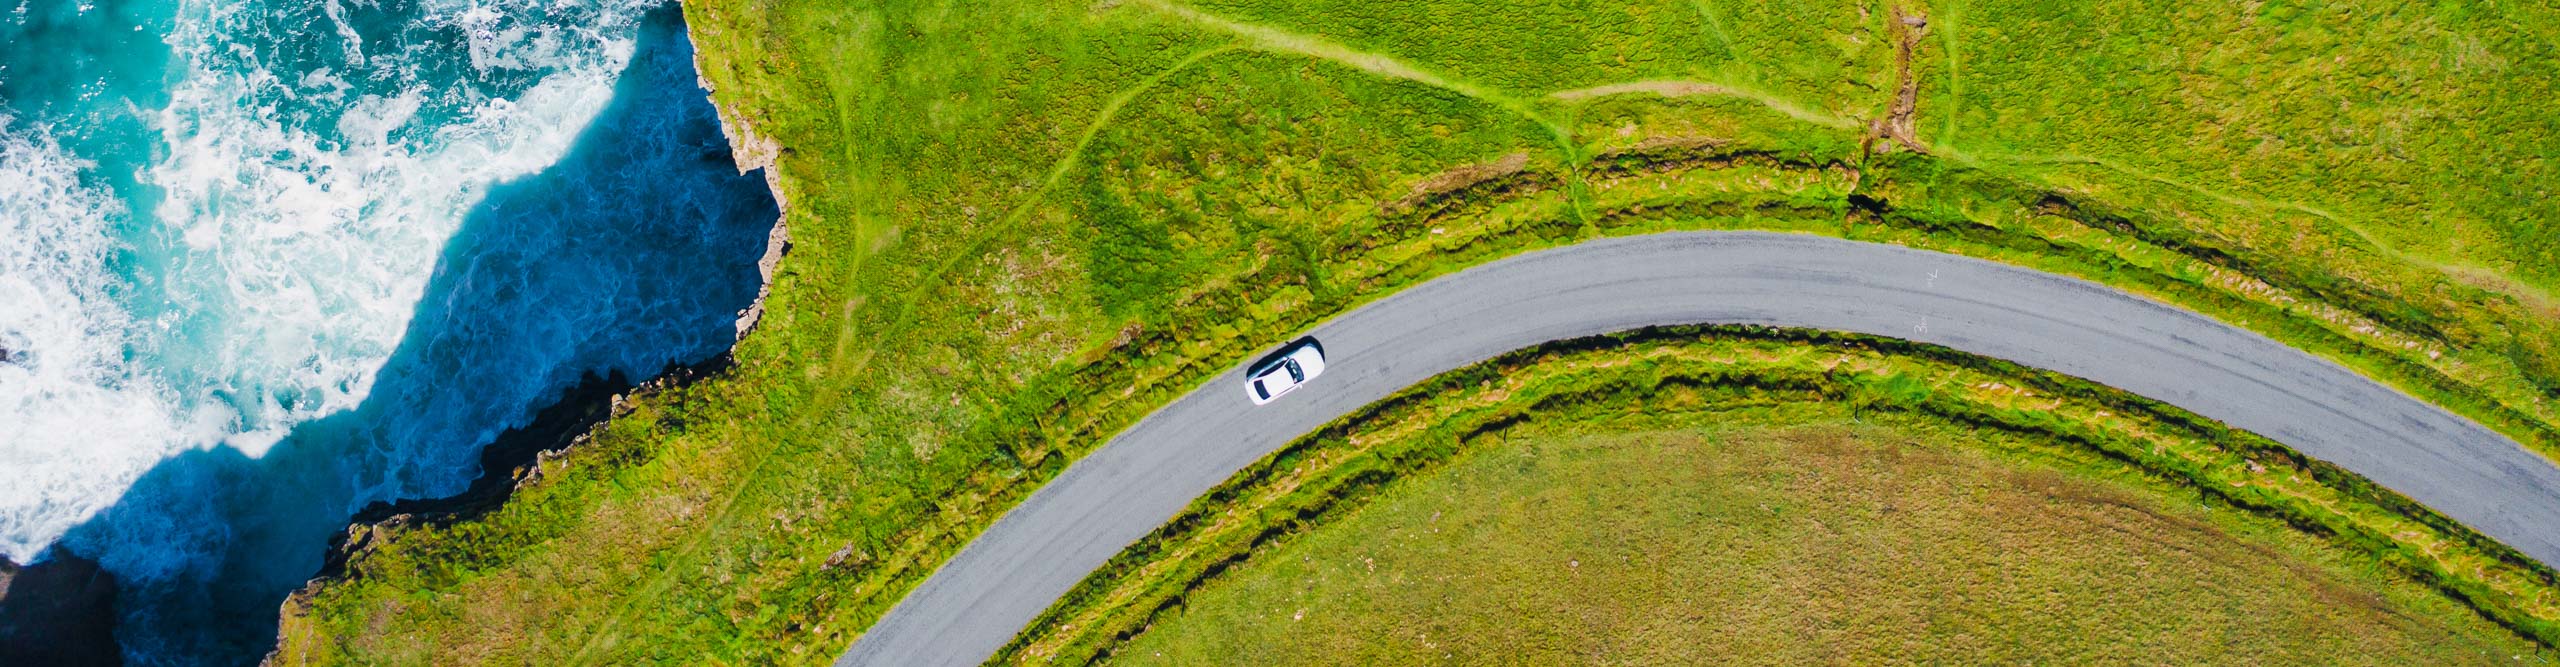 drone shot of car on road near cliffs in Ireland 